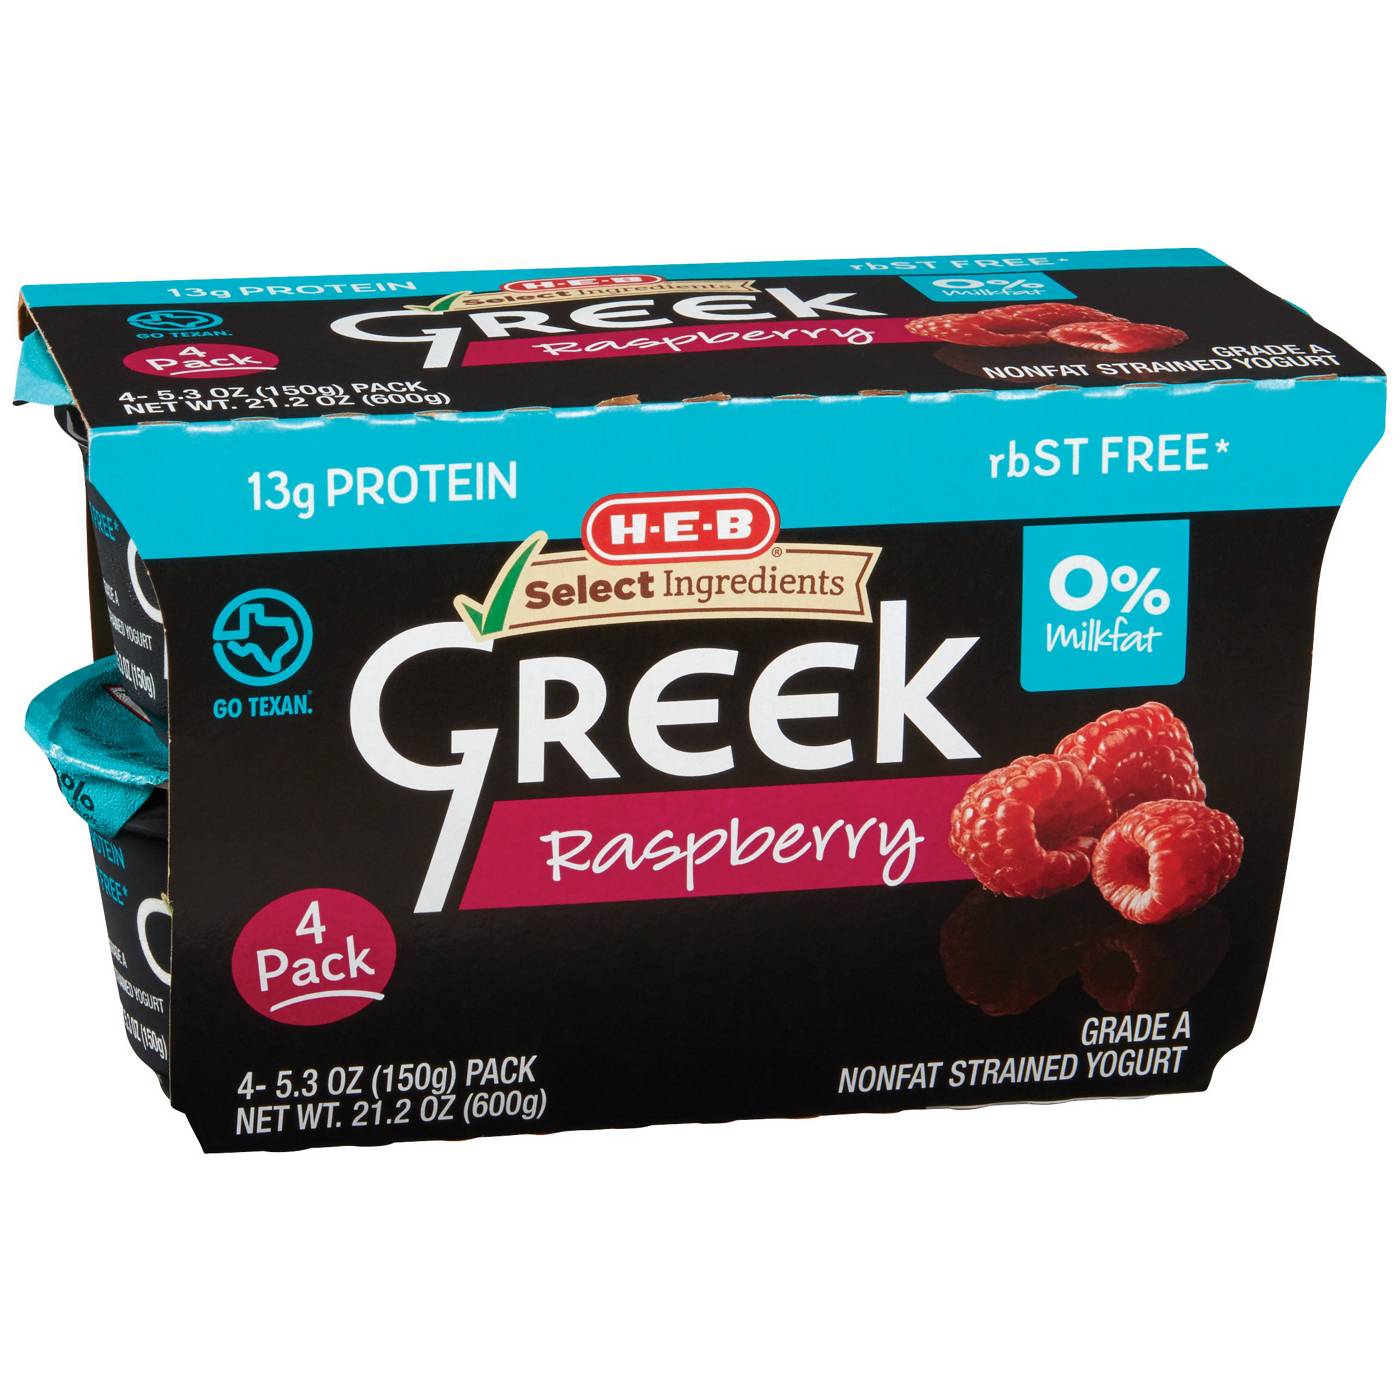 H-E-B Non-Fat Raspberry Greek Yogurt; image 1 of 2